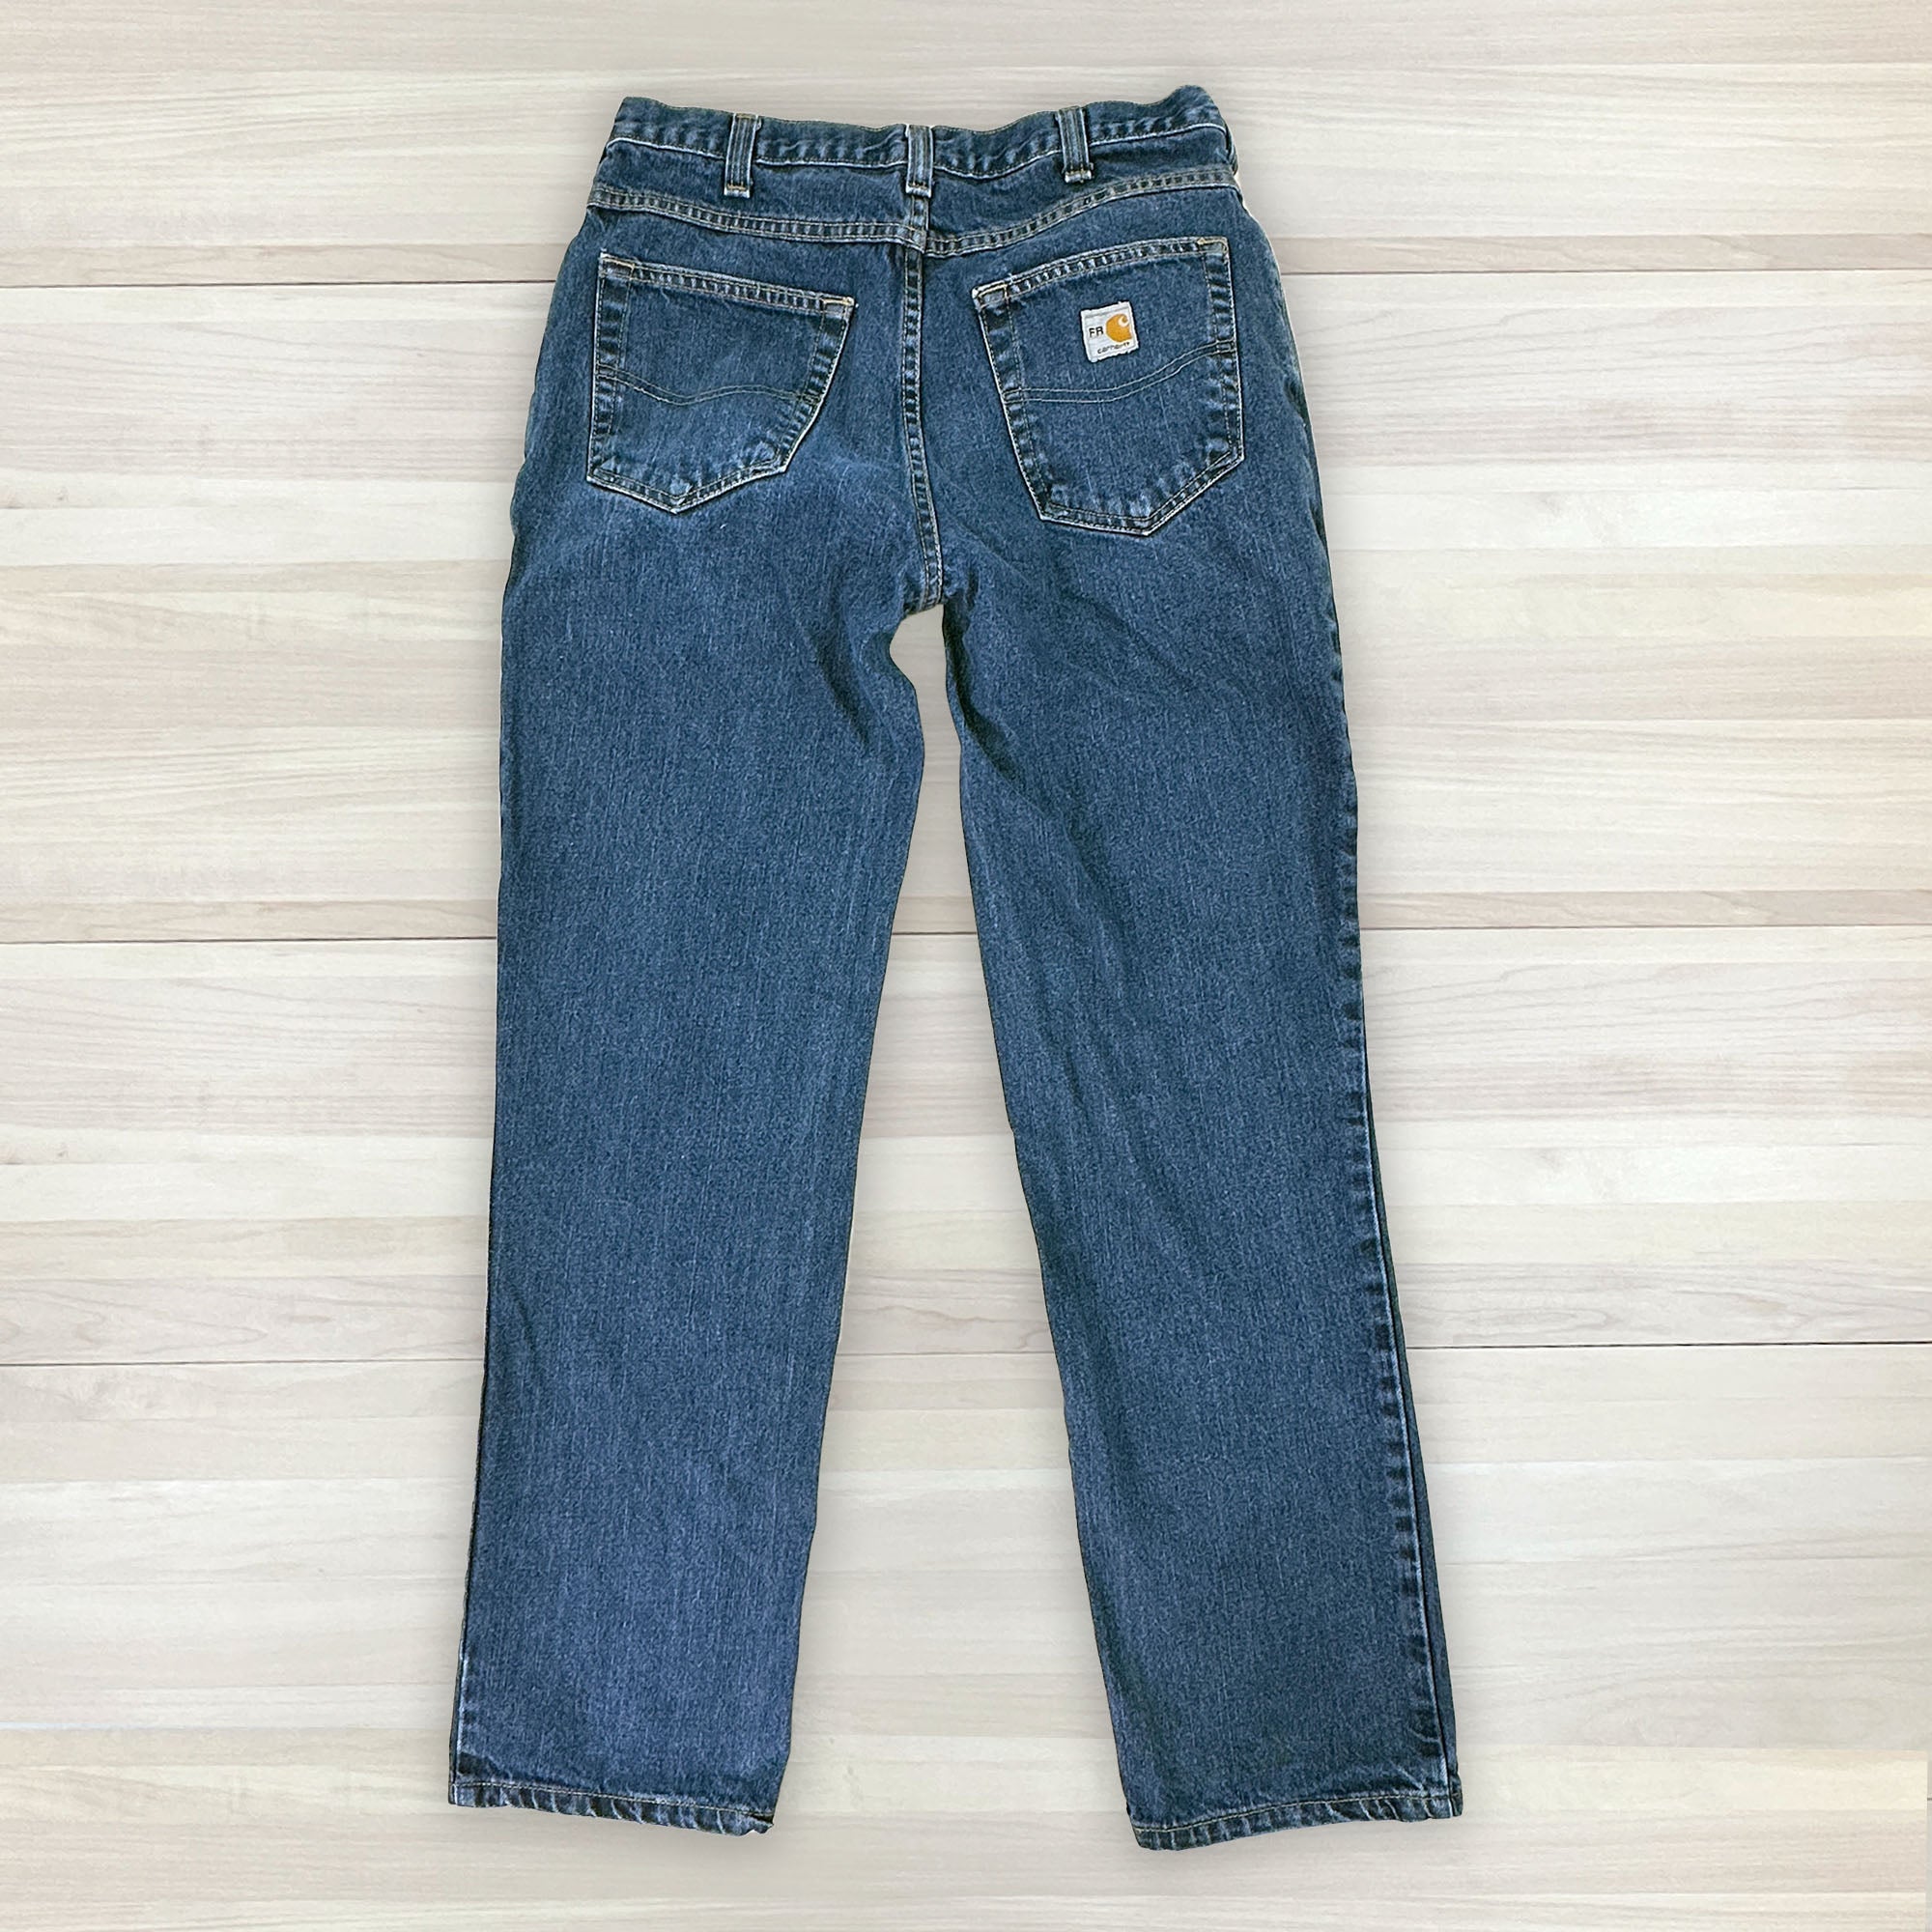 Men's Carhartt FR Flame Resistant Jeans - 32x33